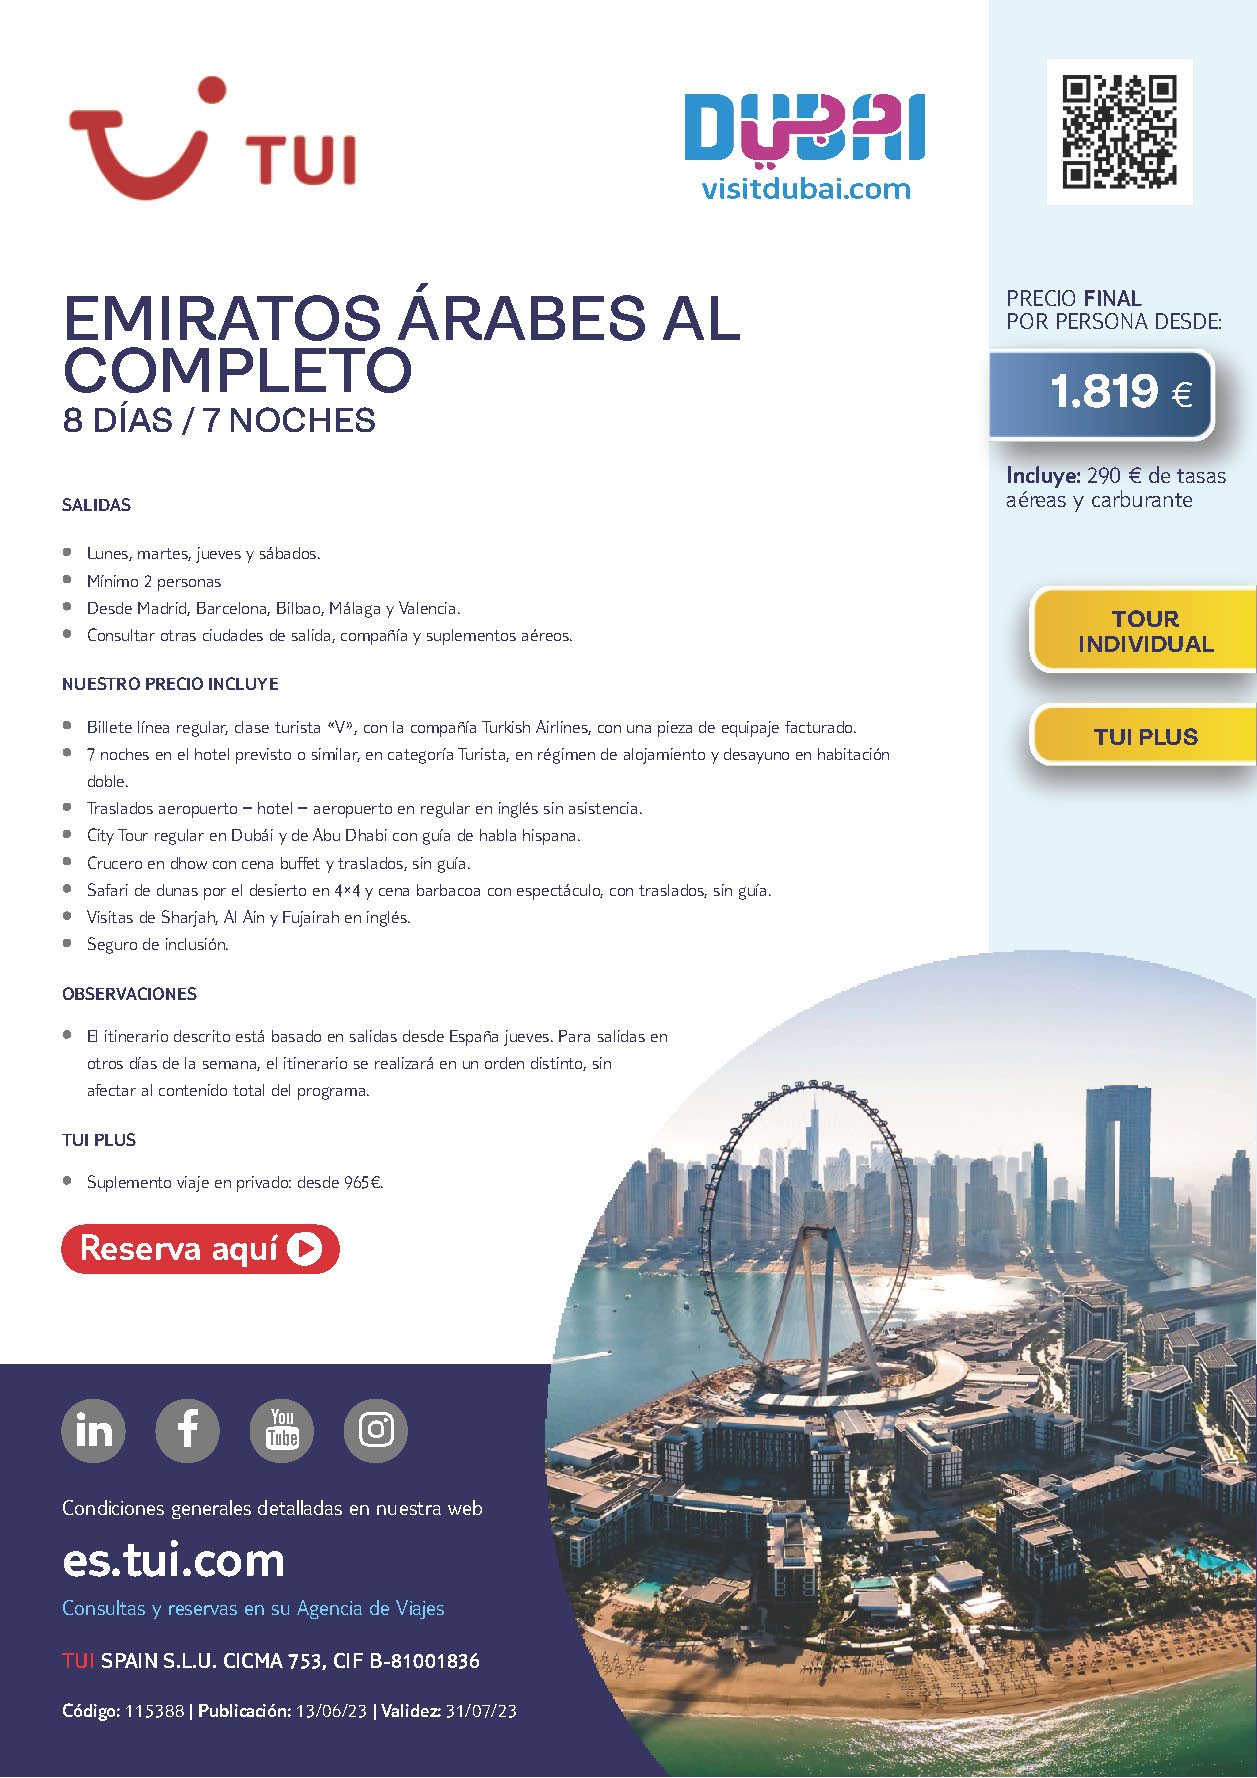 Oferta TUI Emiratos Arabes al Completo dias salidas desde Madrid Barcelona Bilbao Valencia Malaga vuelos Turkish Airlines